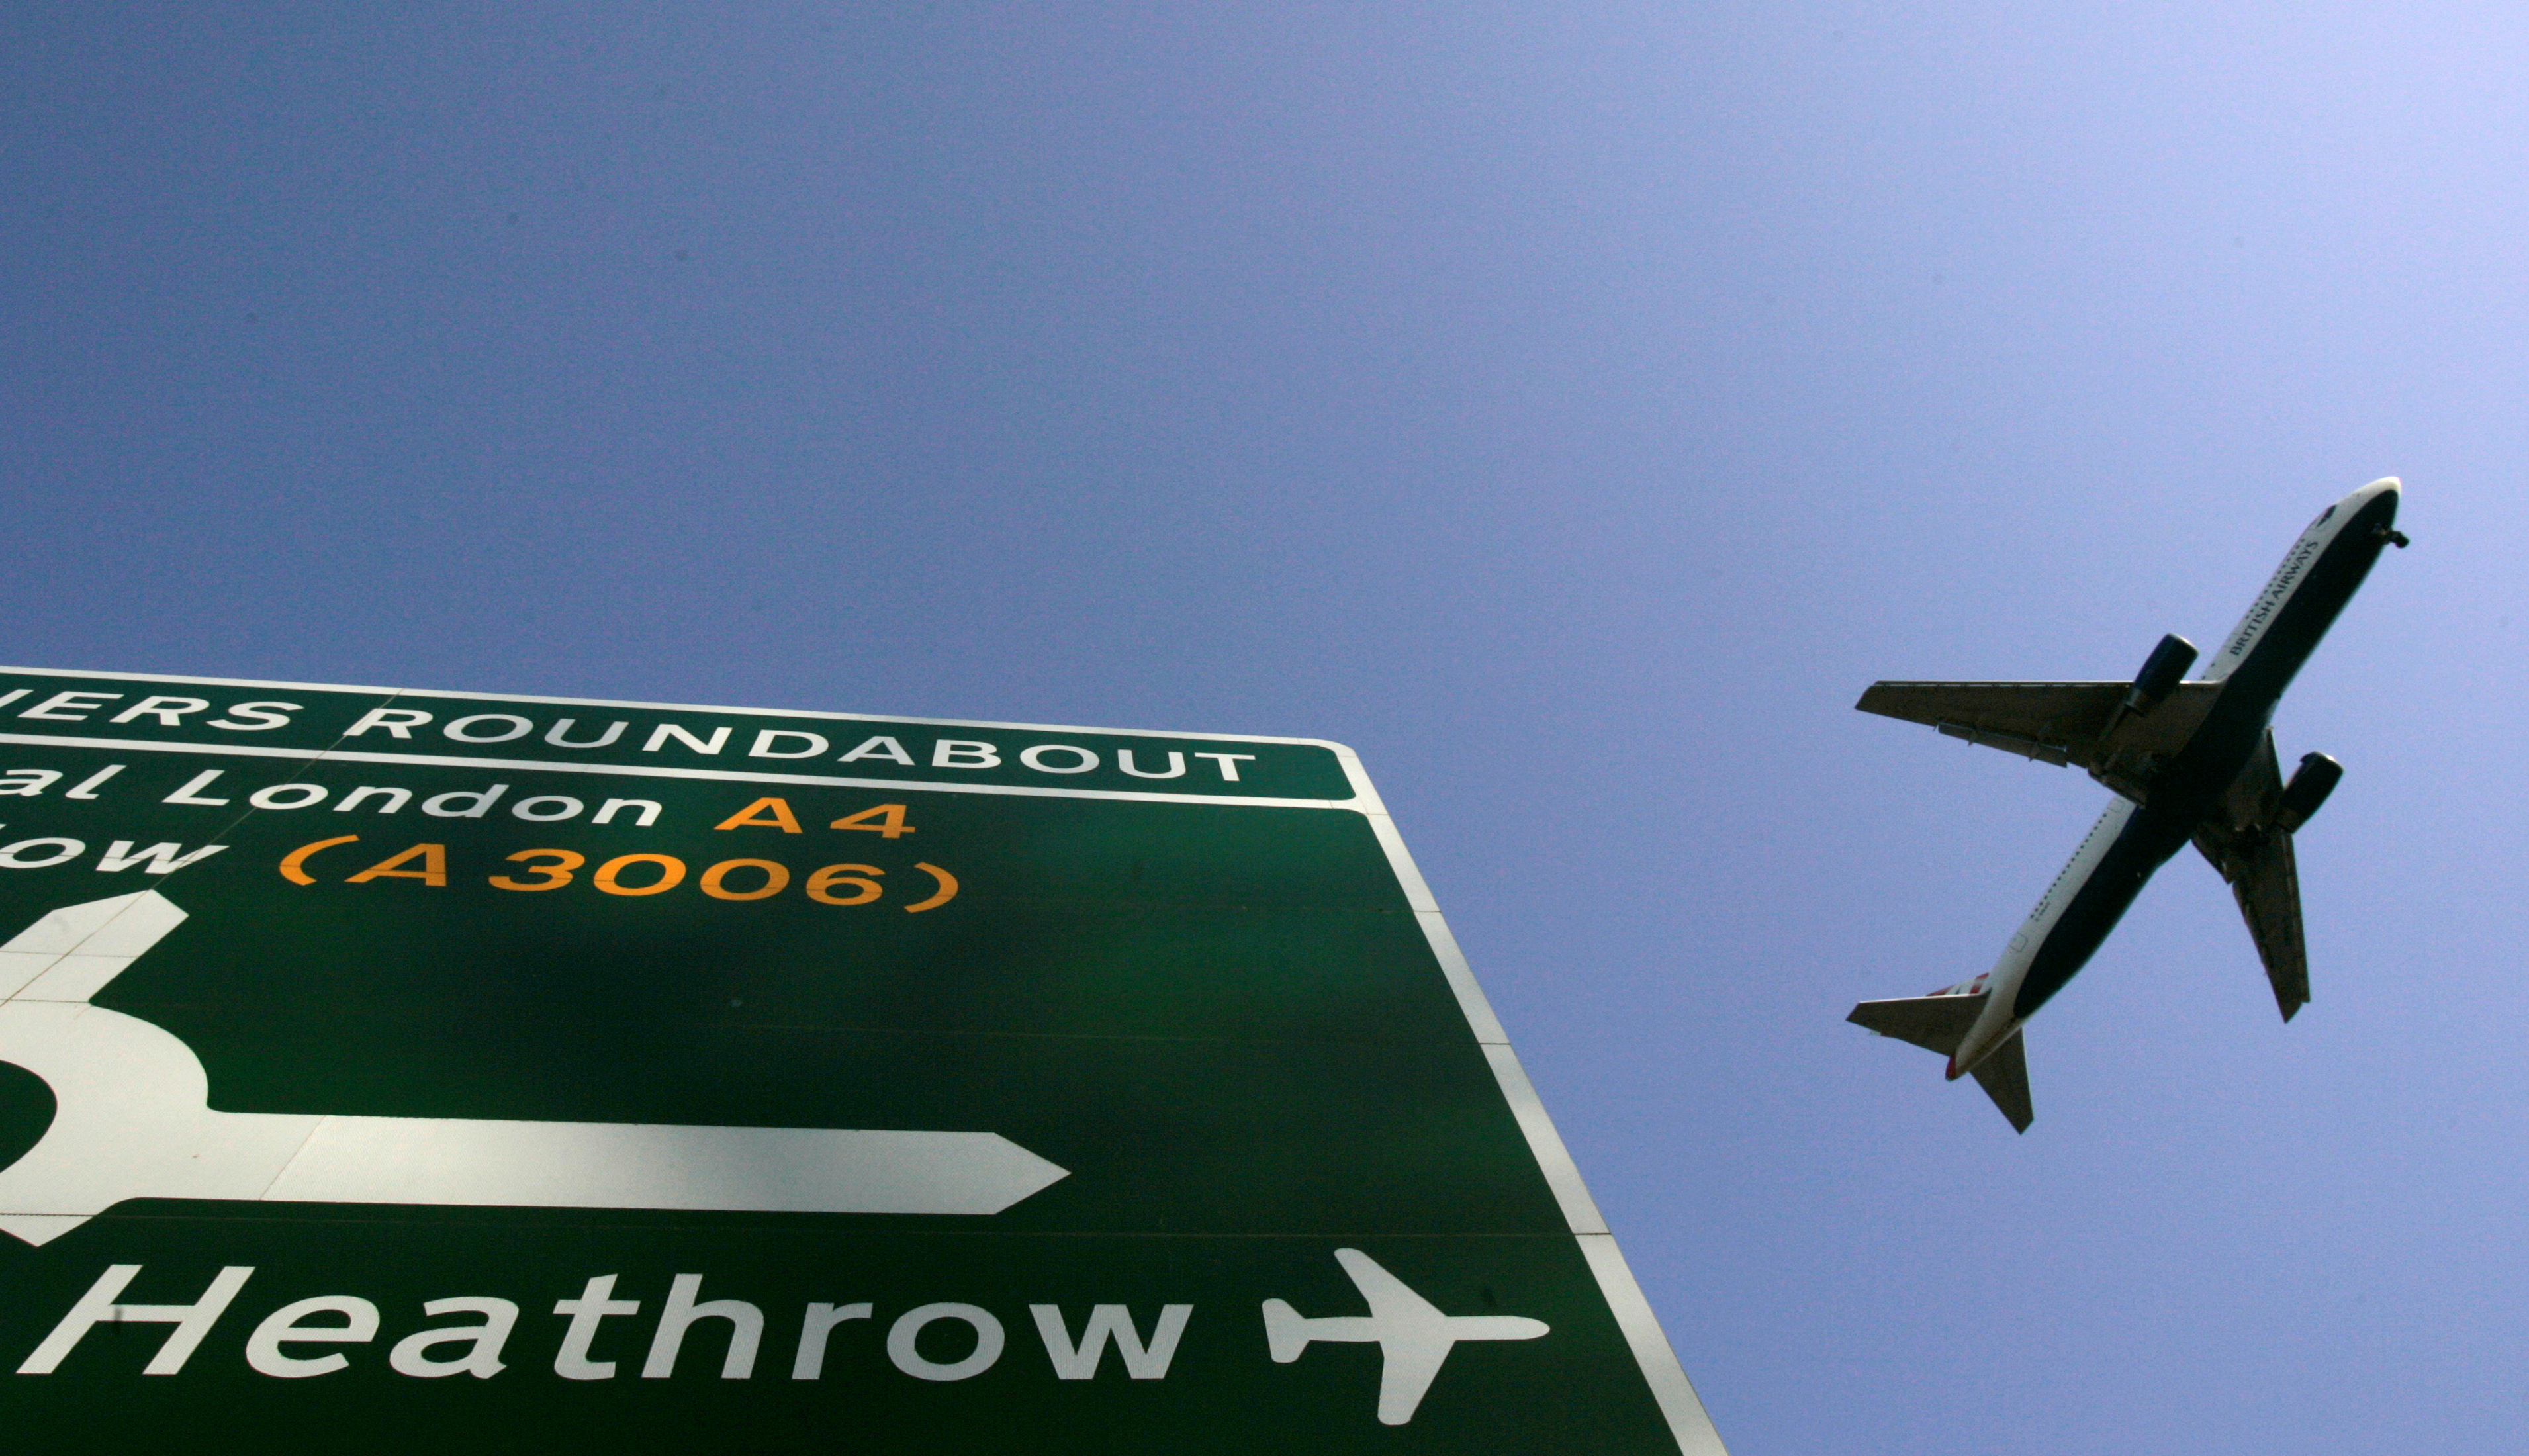 Feu vert à l'extension de l'aéroport de Londres-Heathrow